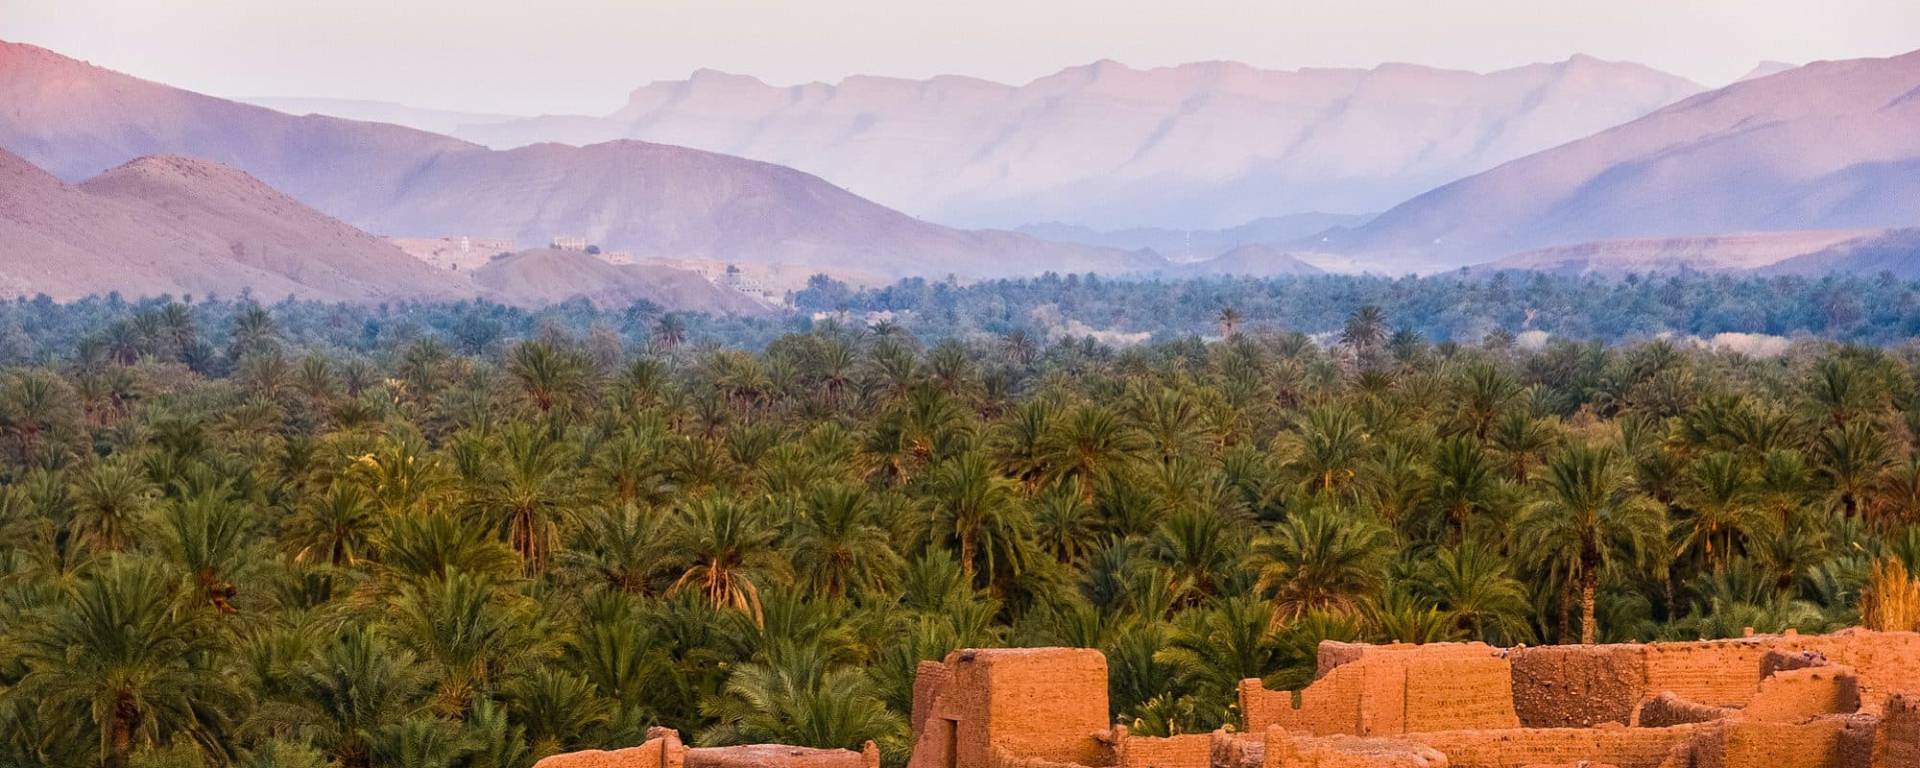 MOROCCO – luxury villa rentals in Marrakech - Feel Luxury Holidays